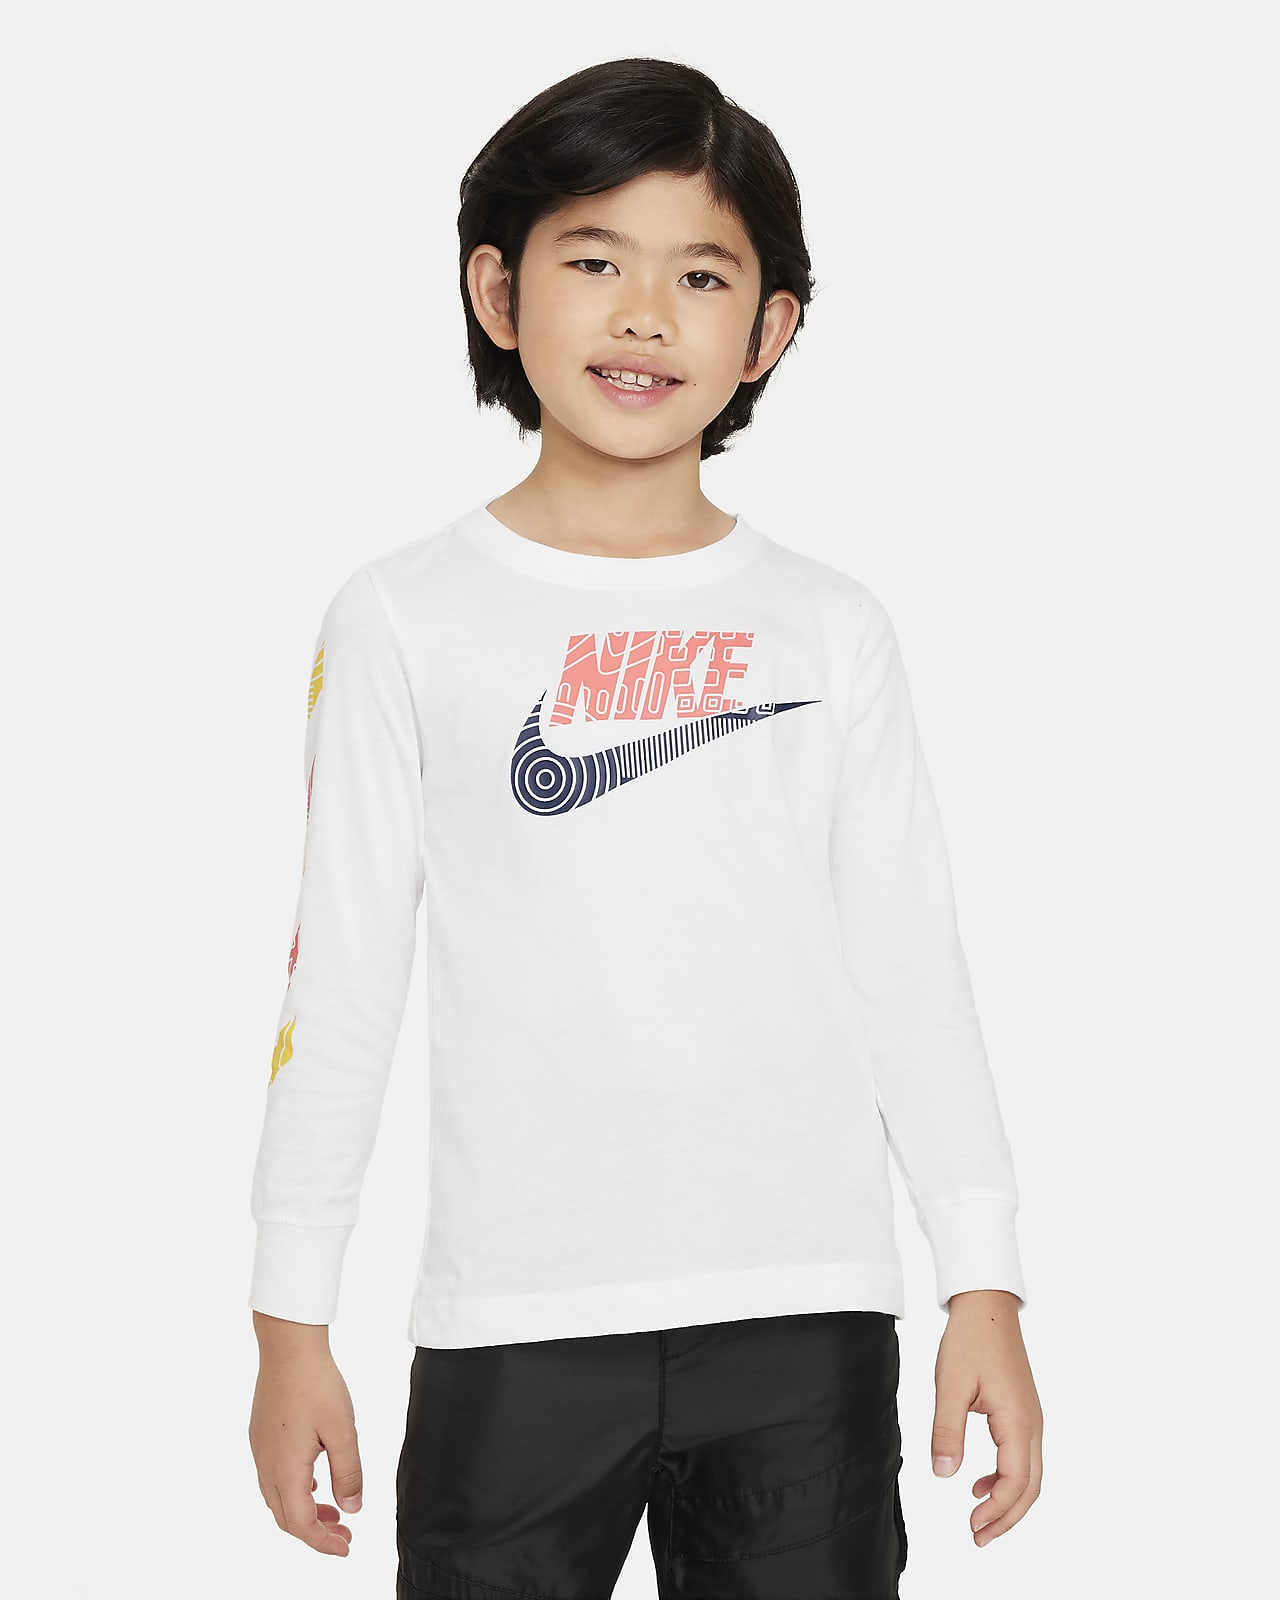 Hazard Nike Kids JP Tee Tread Nike Sleeve T-Shirt. Long Futura Little